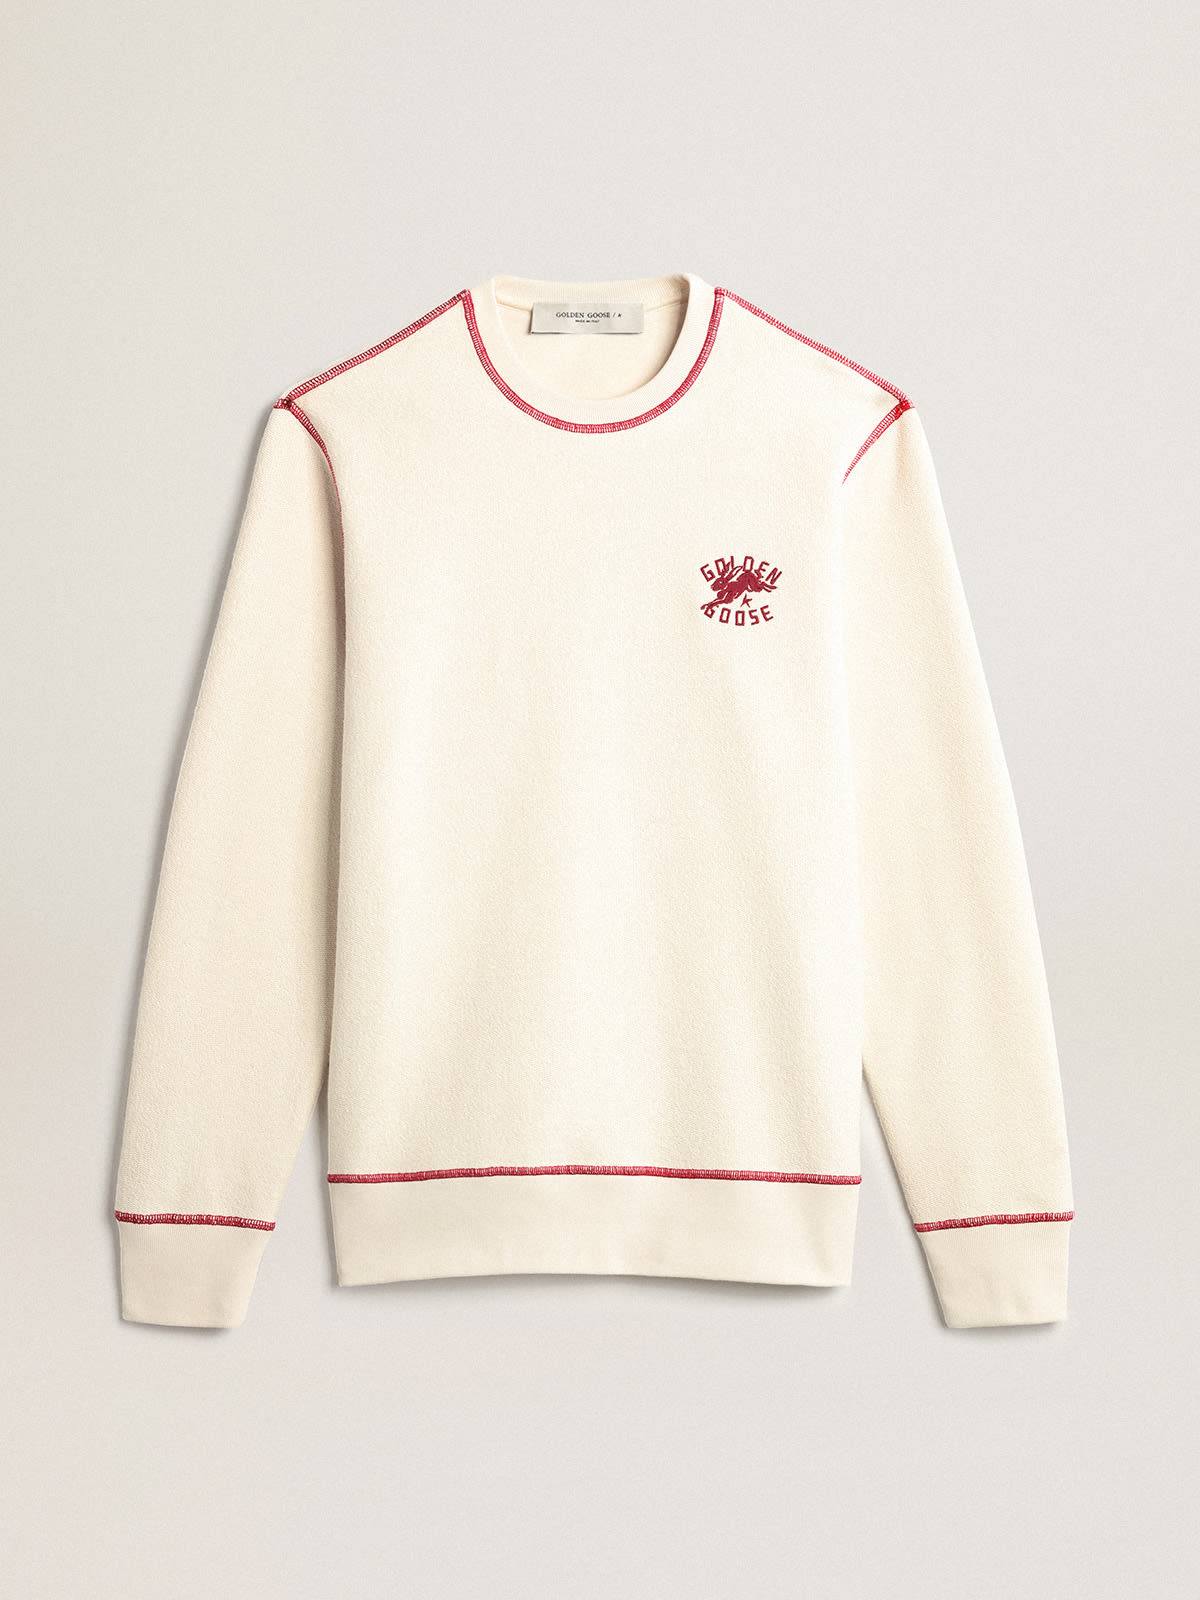 Golden Goose - Men’s heritage white sweatshirt with CNY logo in 